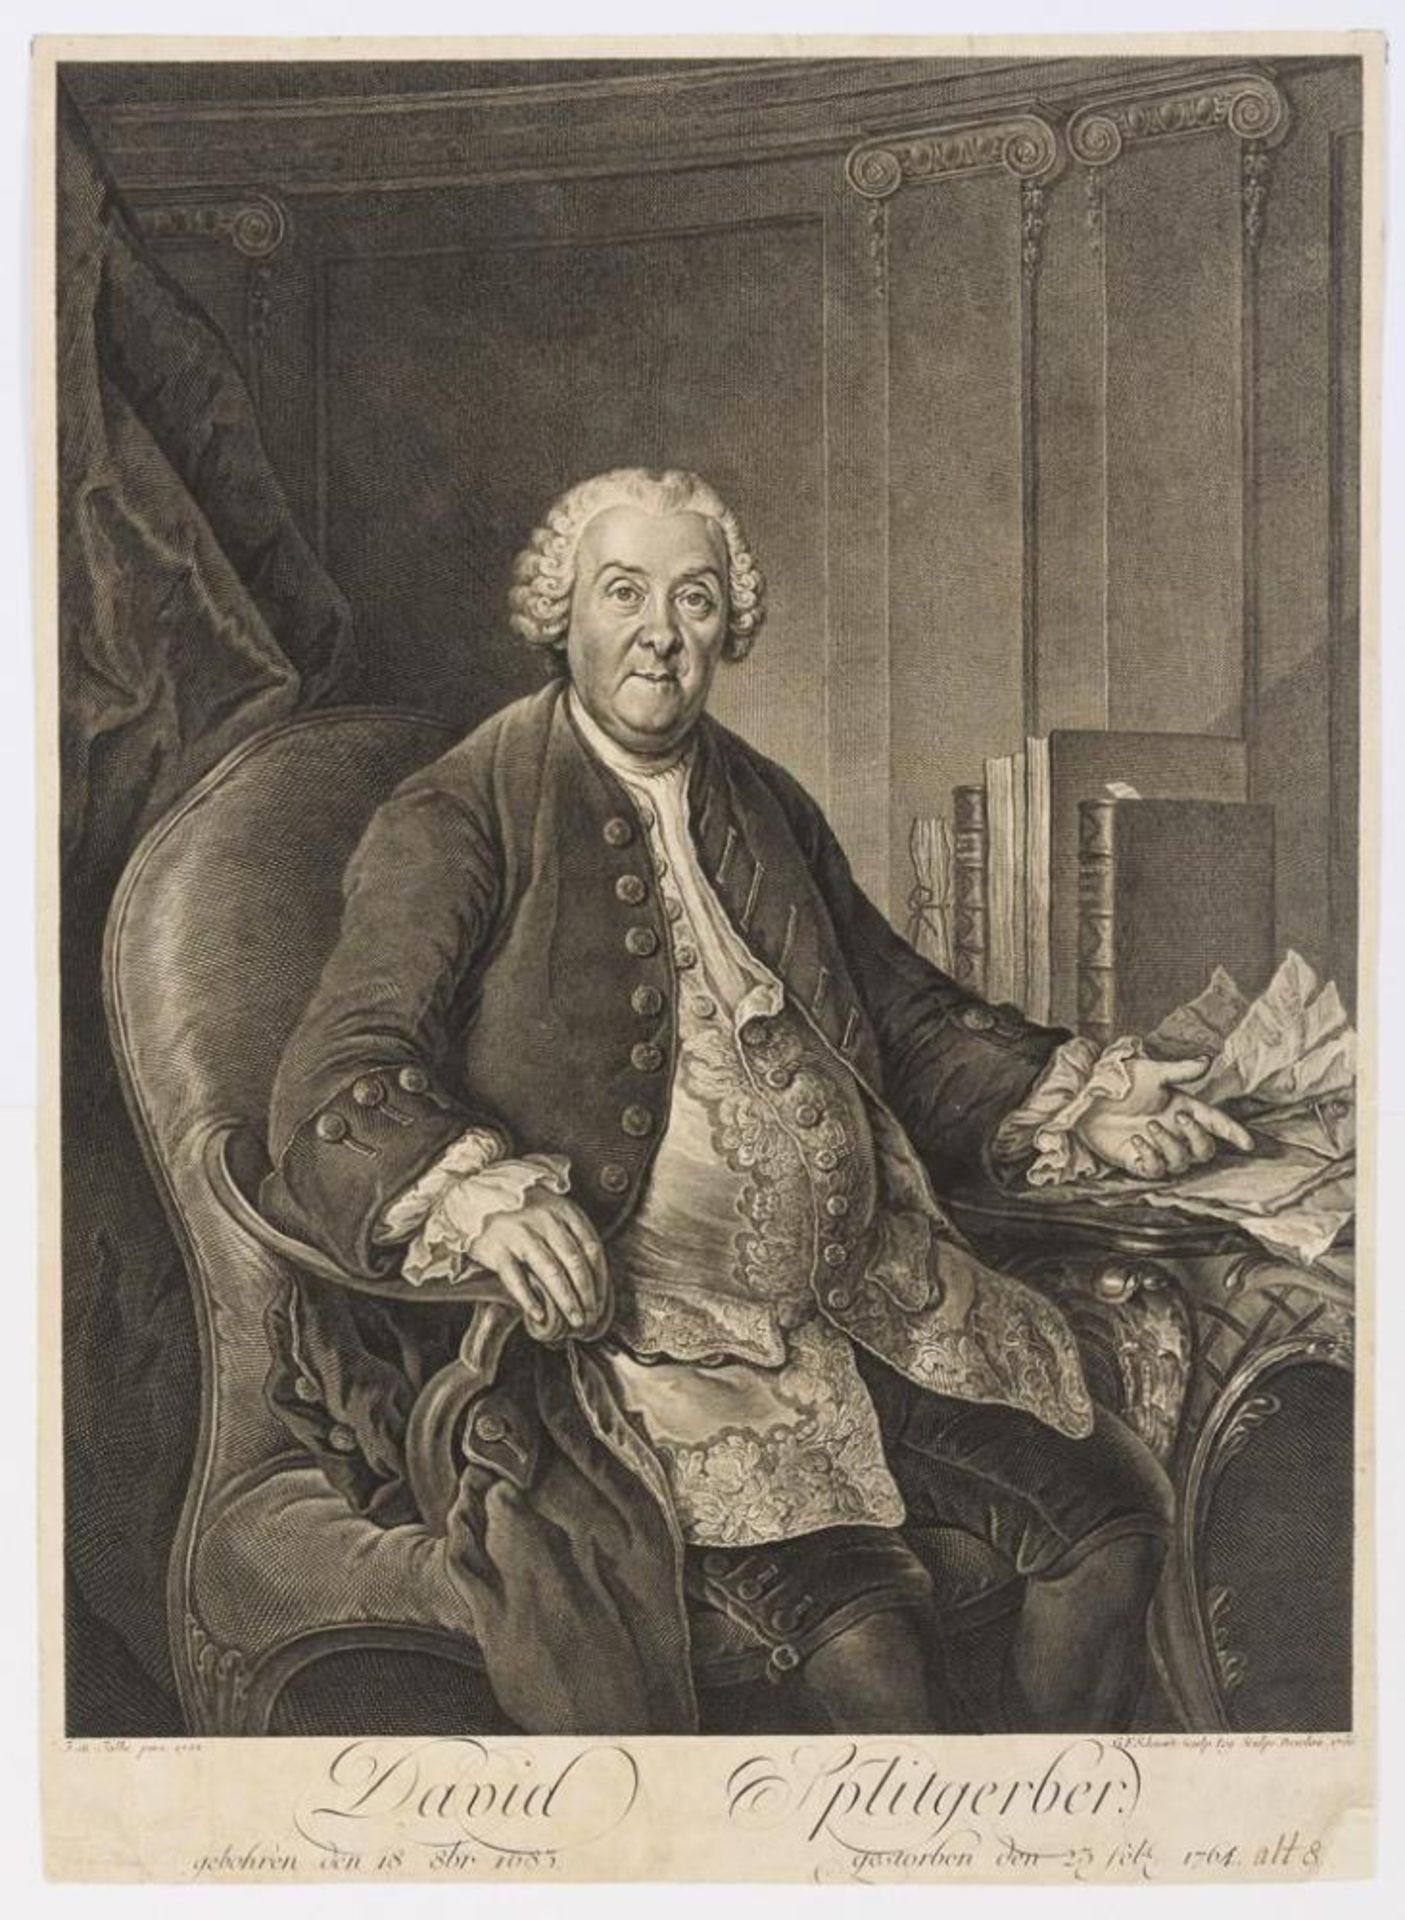 SCHMIDT, Georg Friedrich (1712 Schönerlinde - 1775 Berlin). "David Splitgerber".